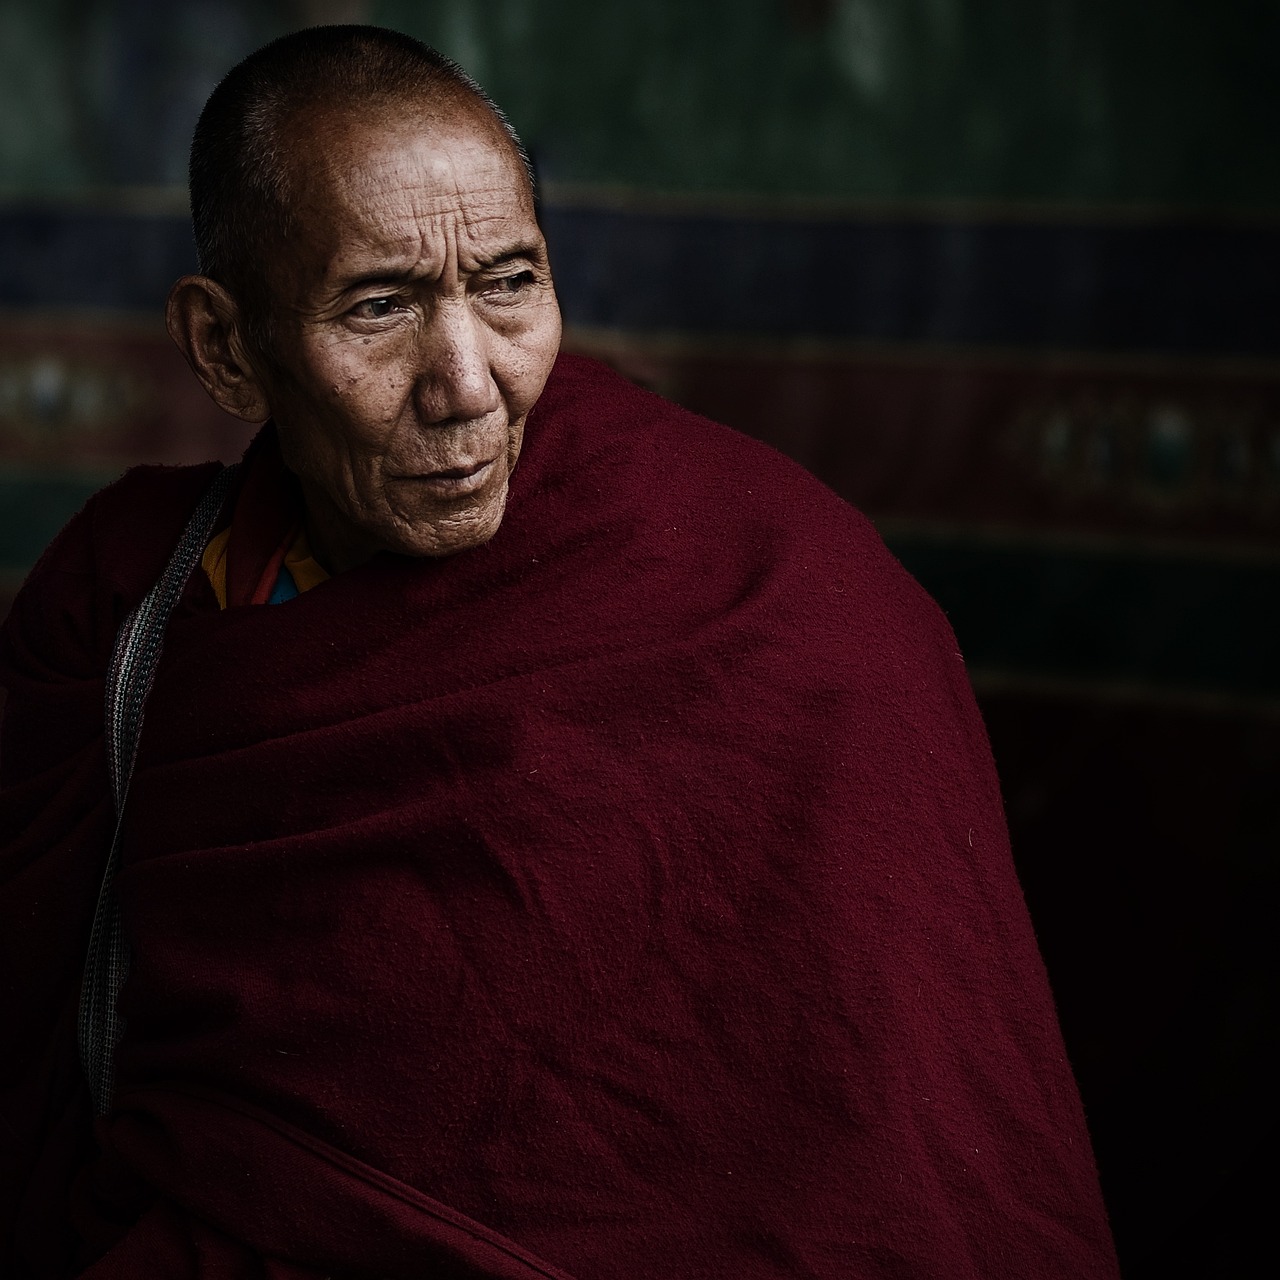 ¿Cómo vive un Monje Tibetano?